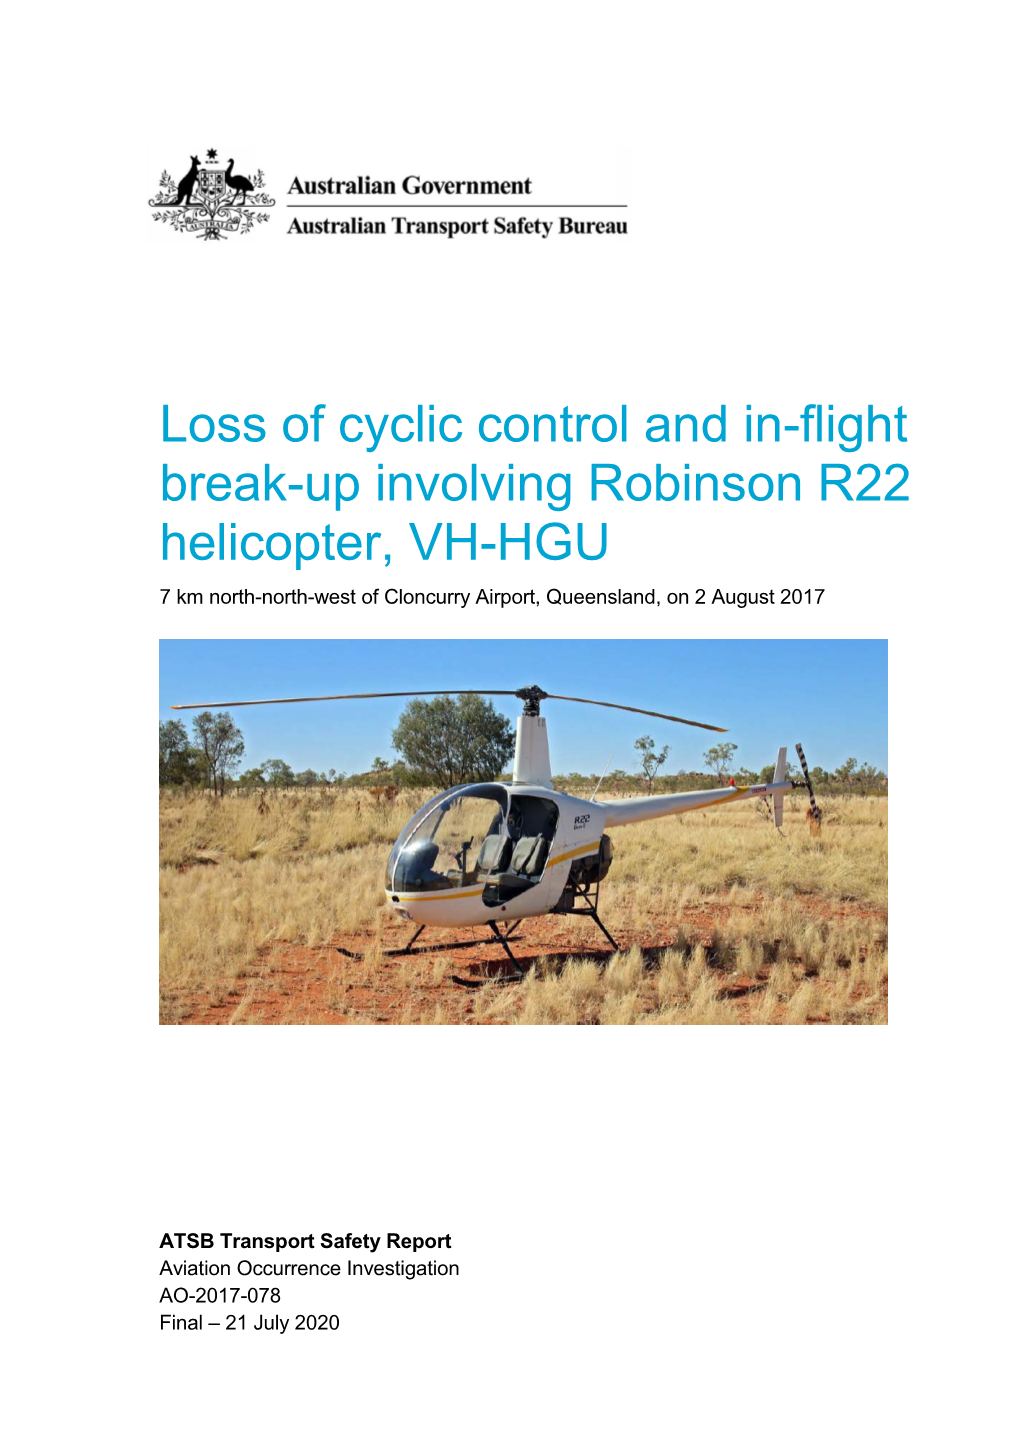 Loss of Cyclic Control and in Flight Break-Up Involving Robinson R22